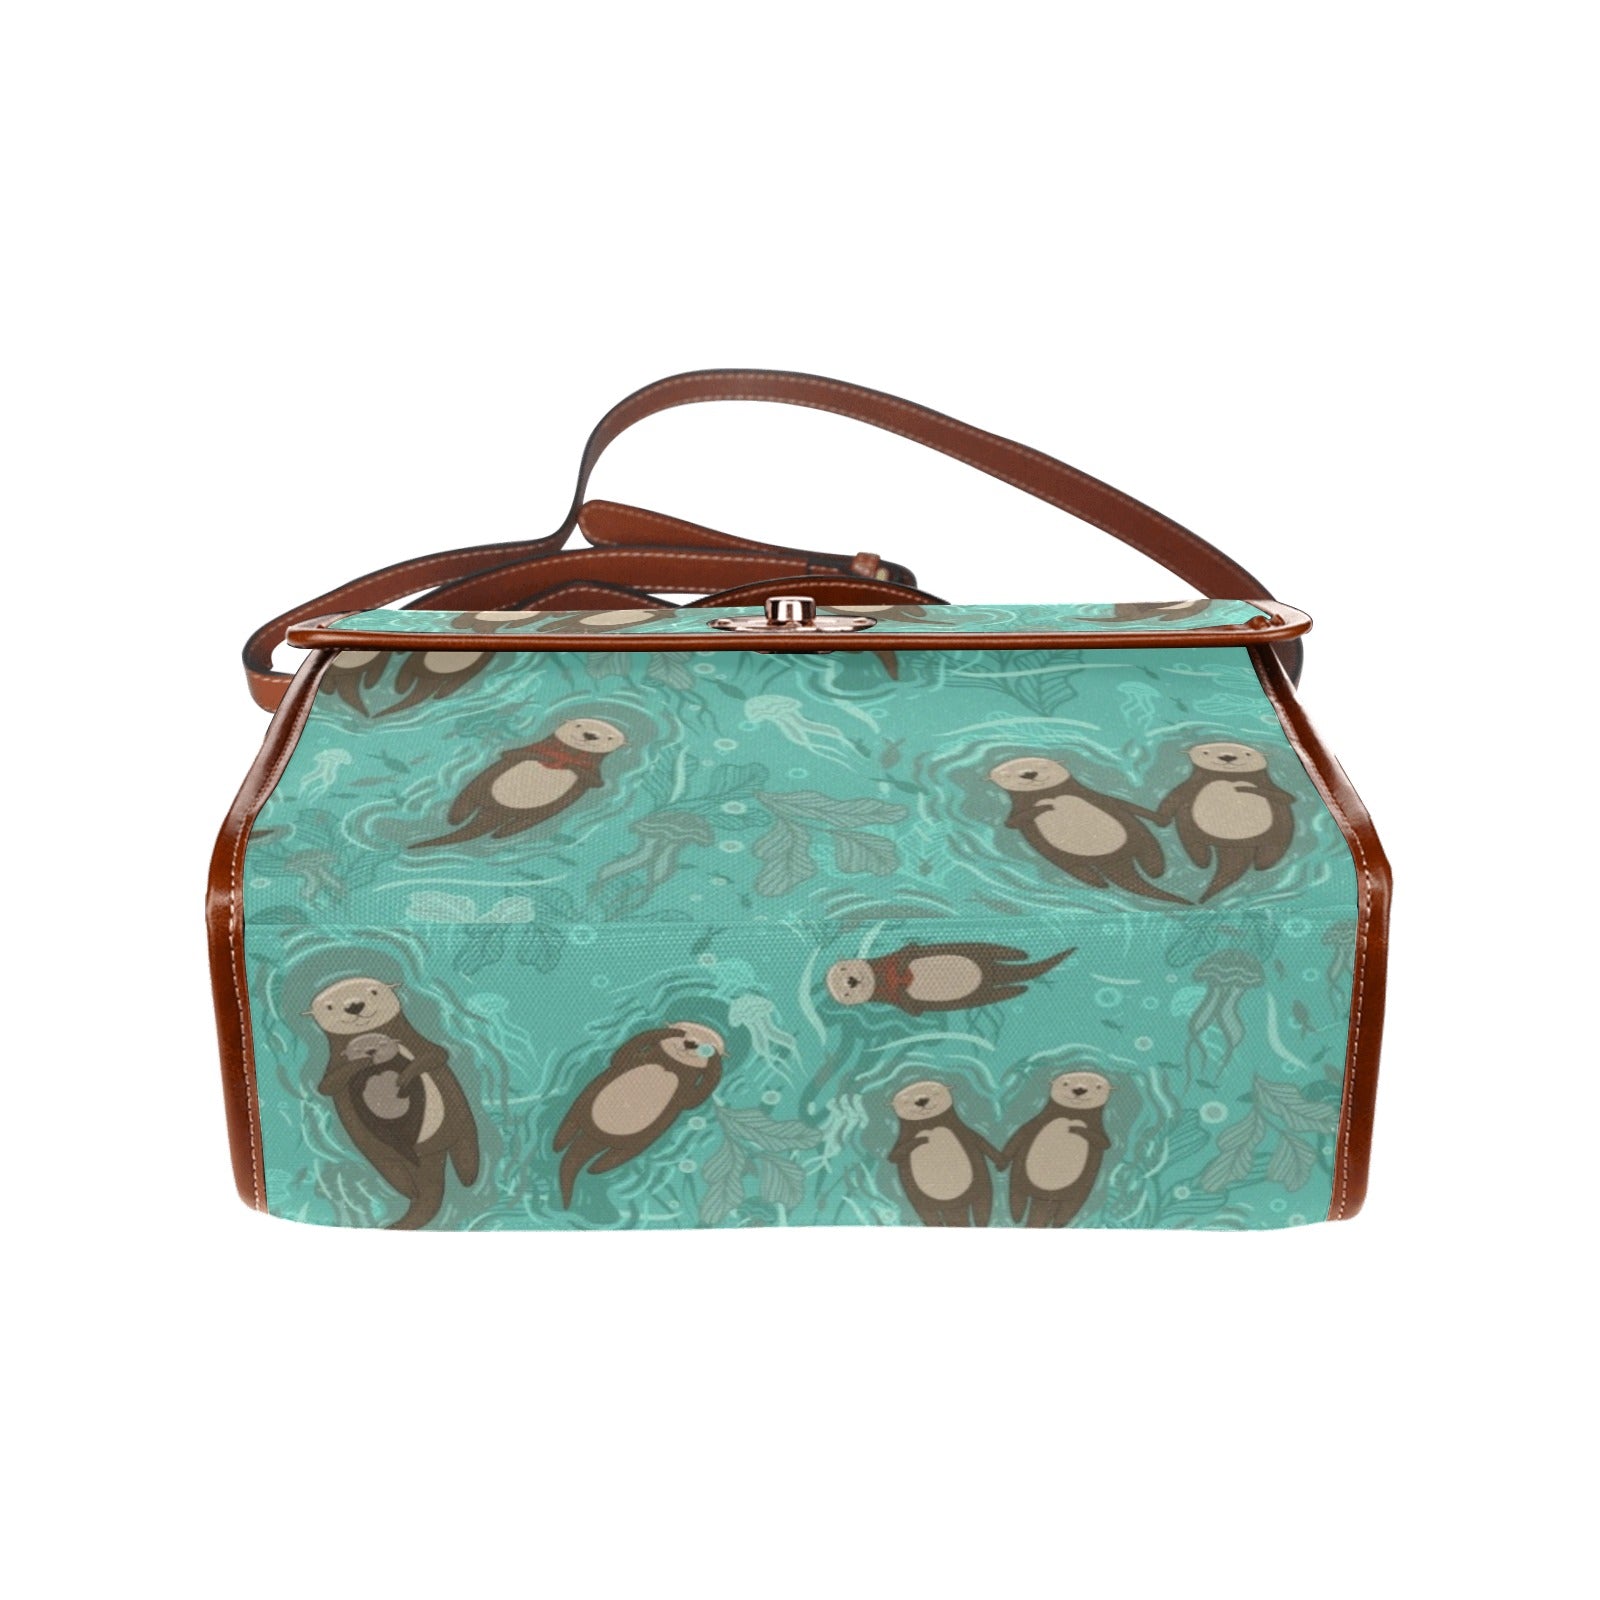 Otters - Waterproof Canvas Handbag